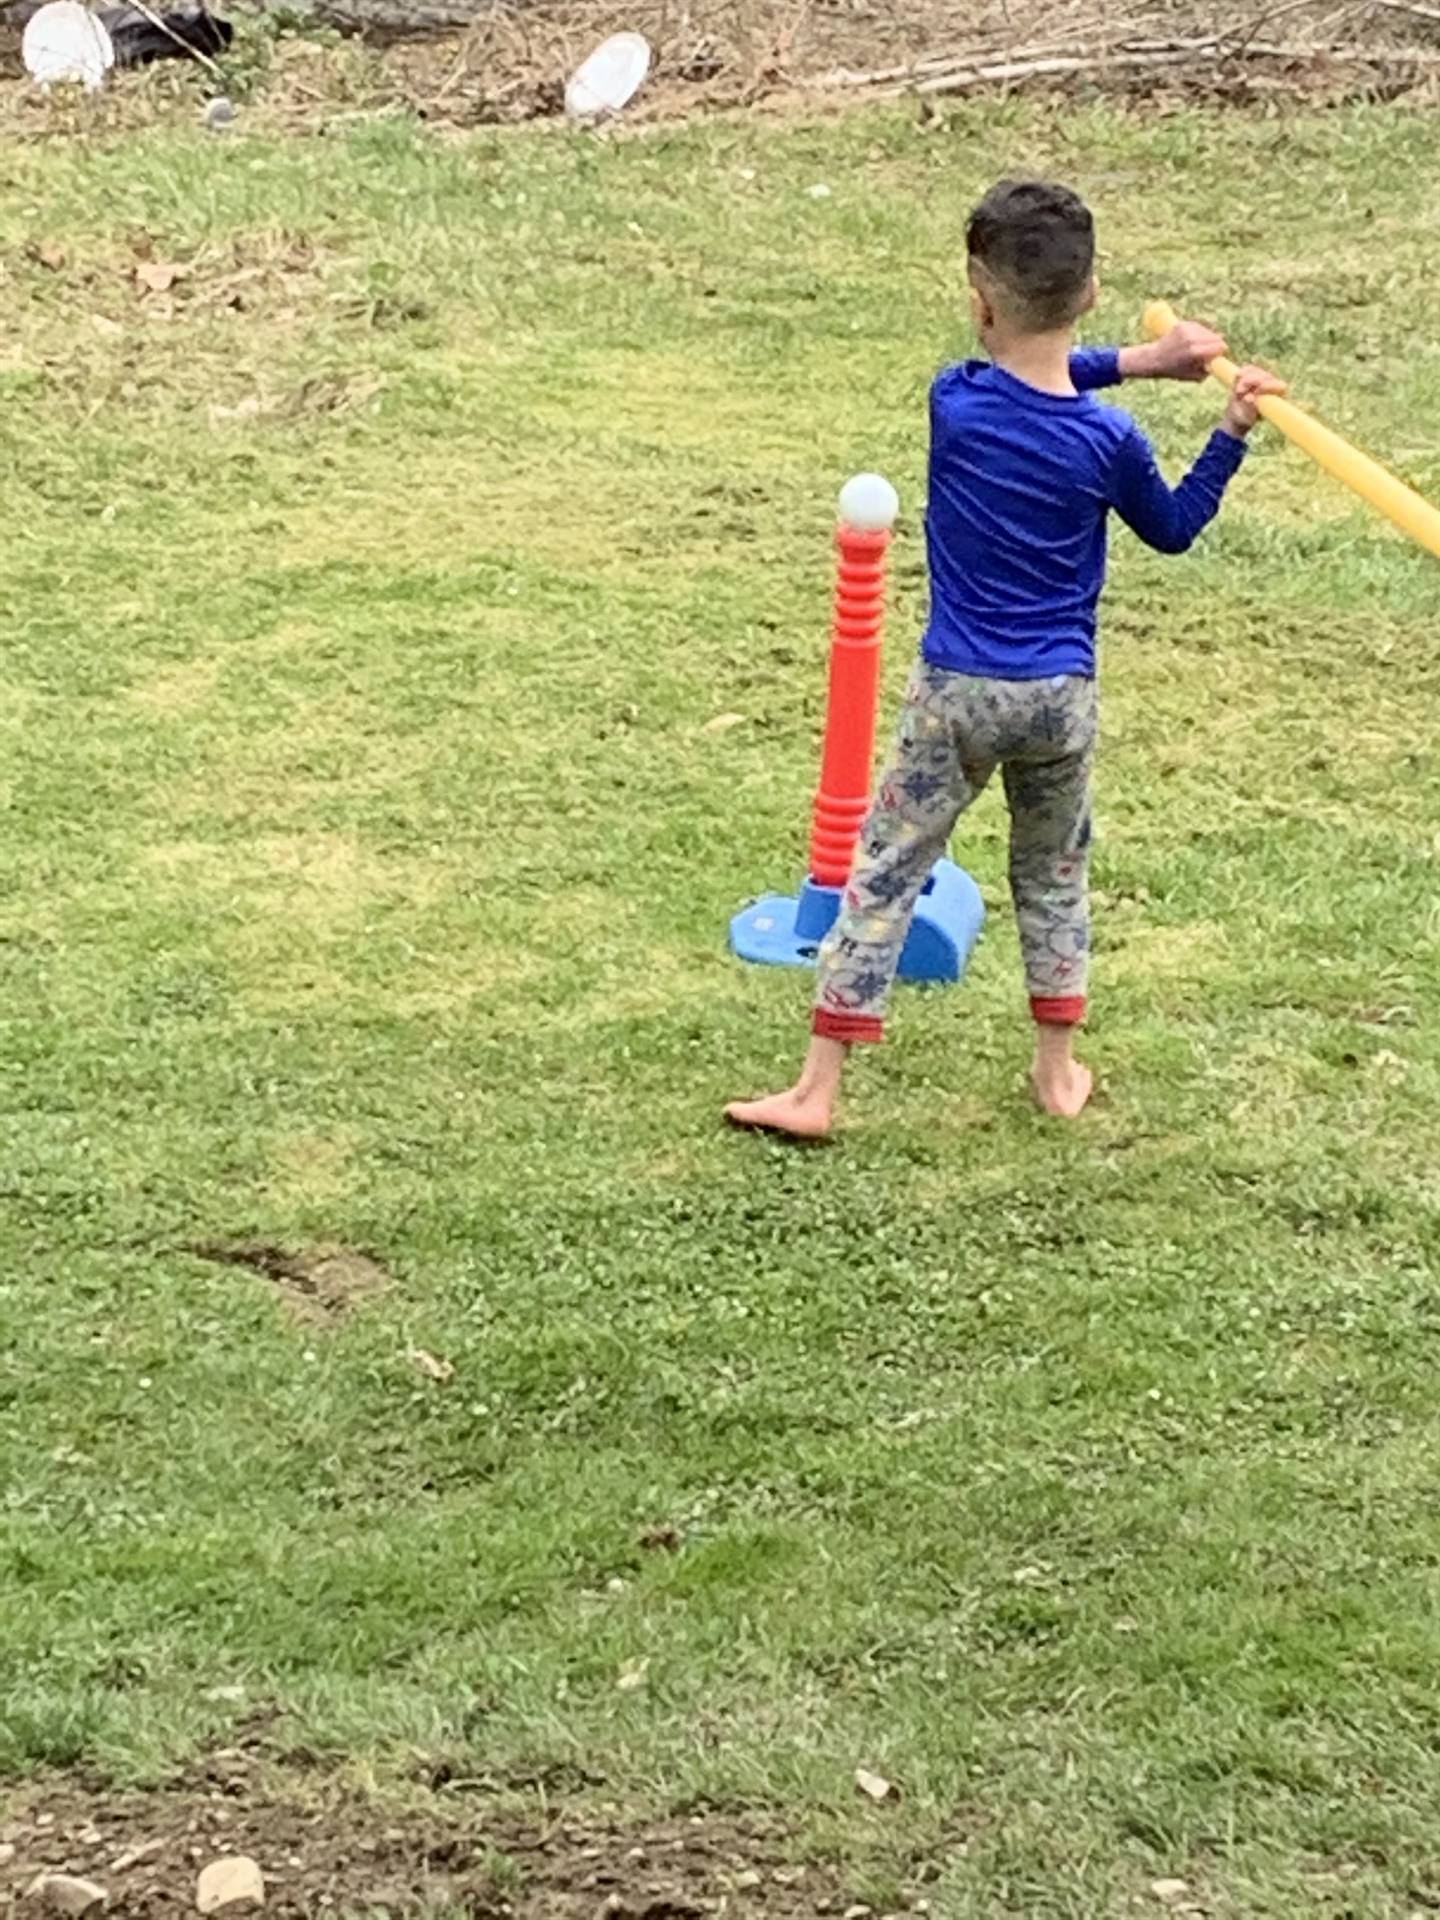 A boy swings at a ball!